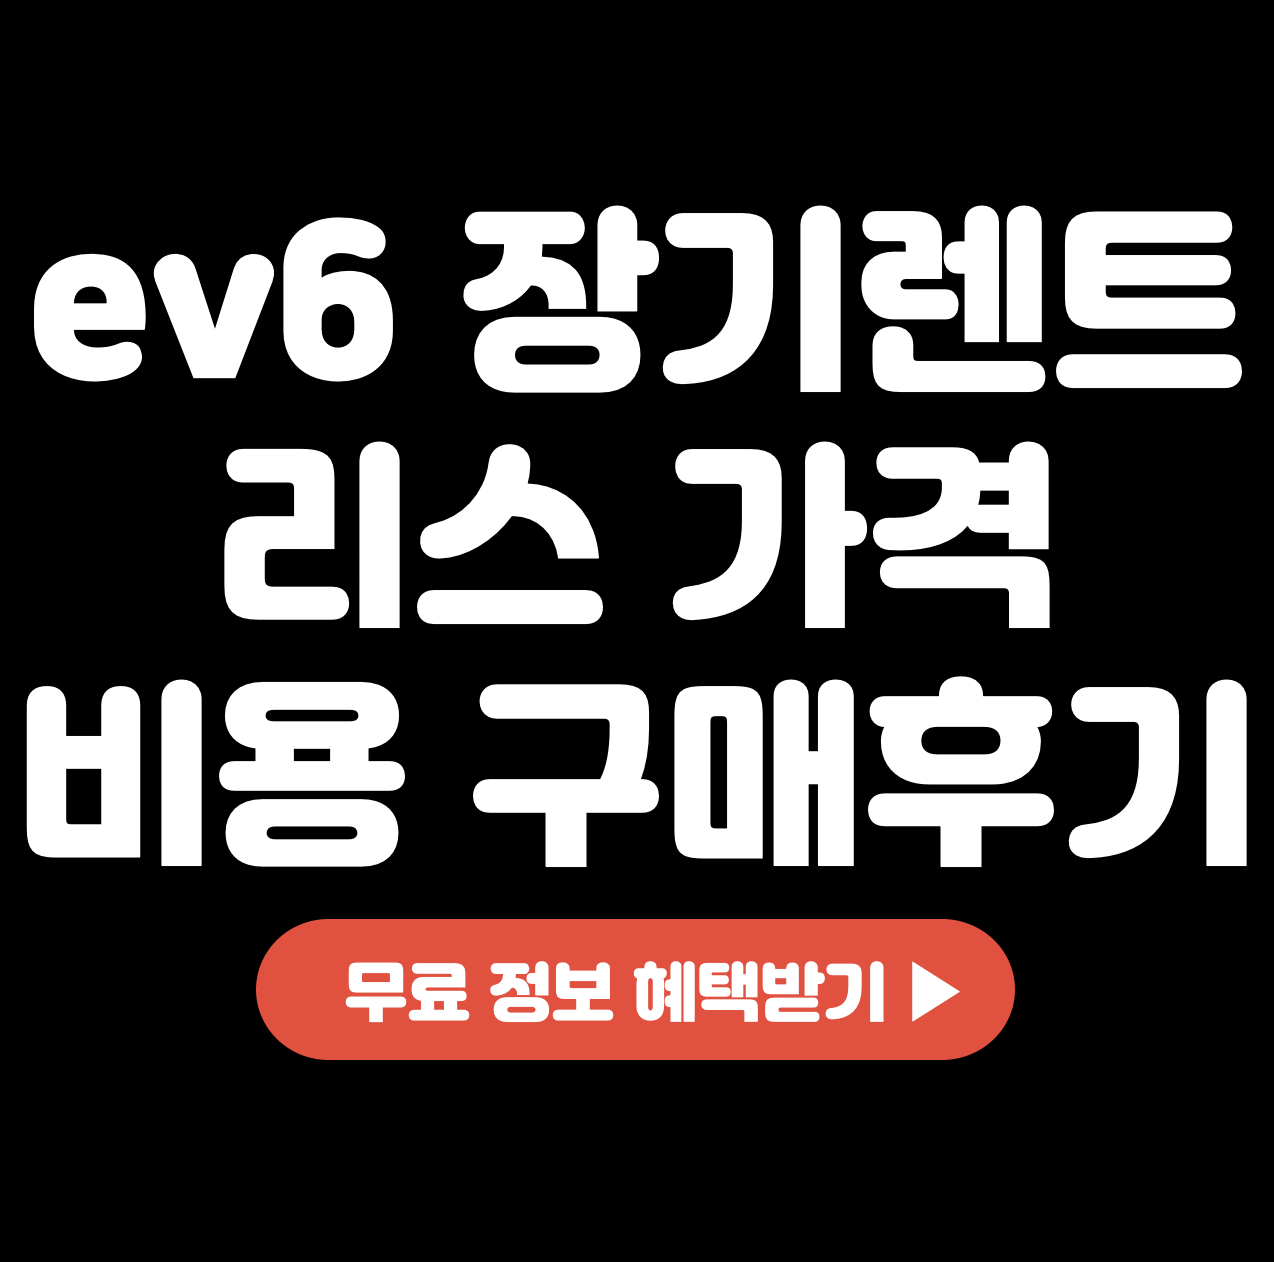 This is ev6 장기렌트 리스 가격 &#124; 비용 구매 후기